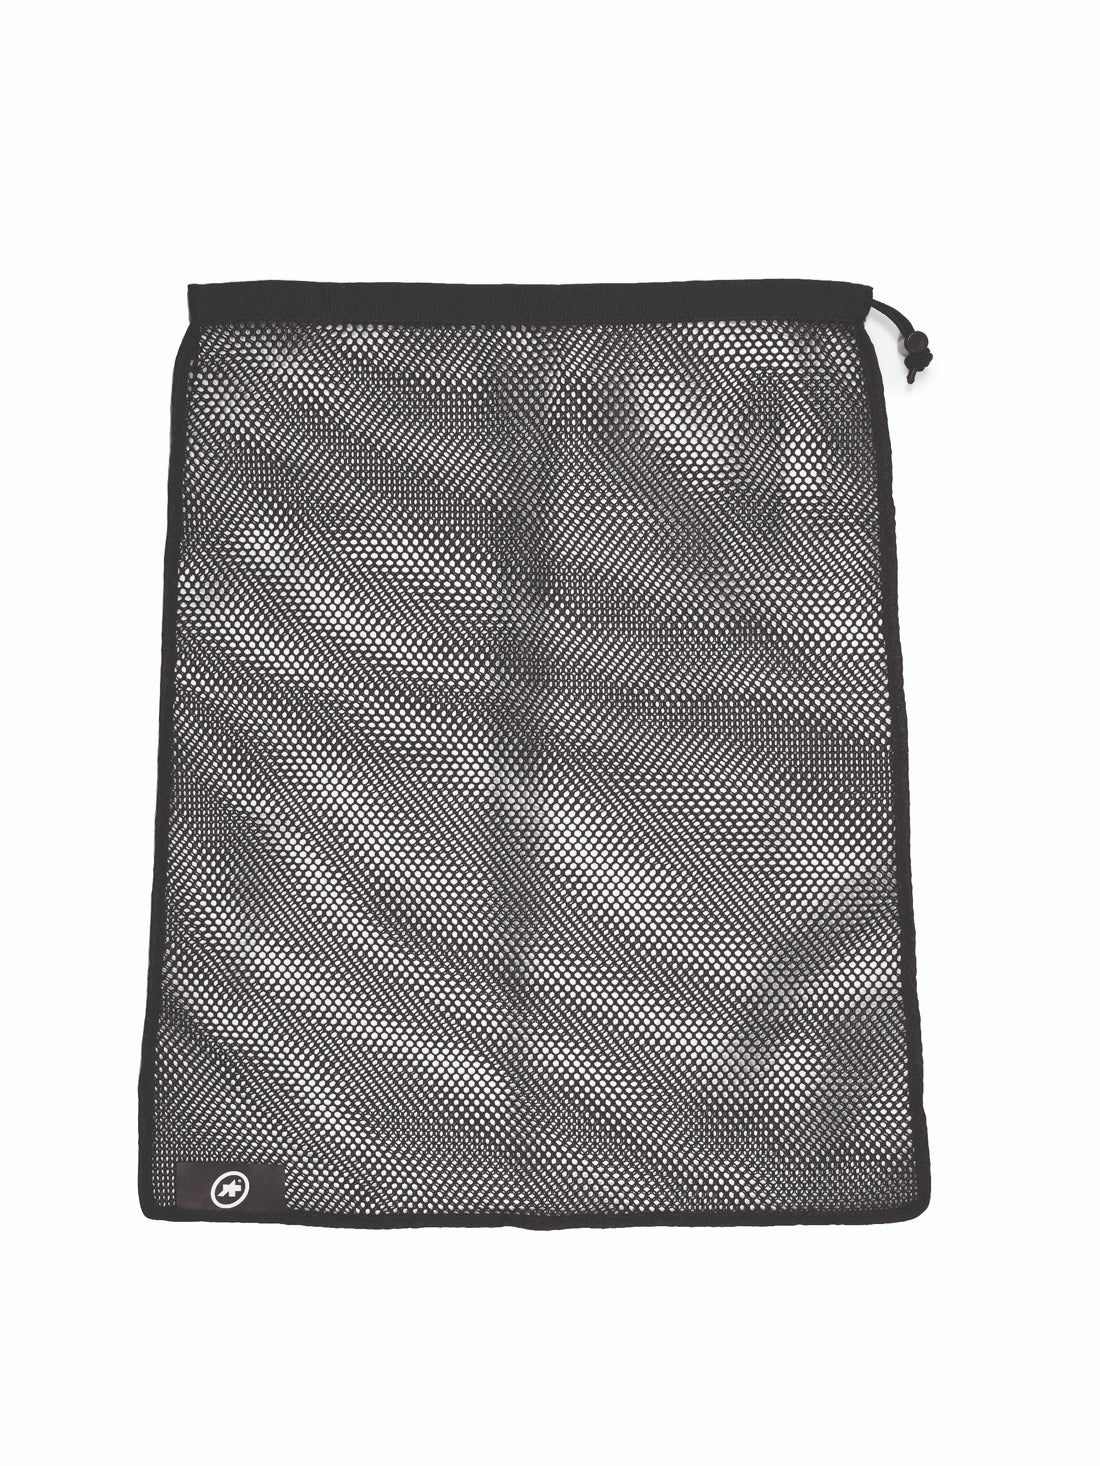 Laundry Bag EVO Black Series